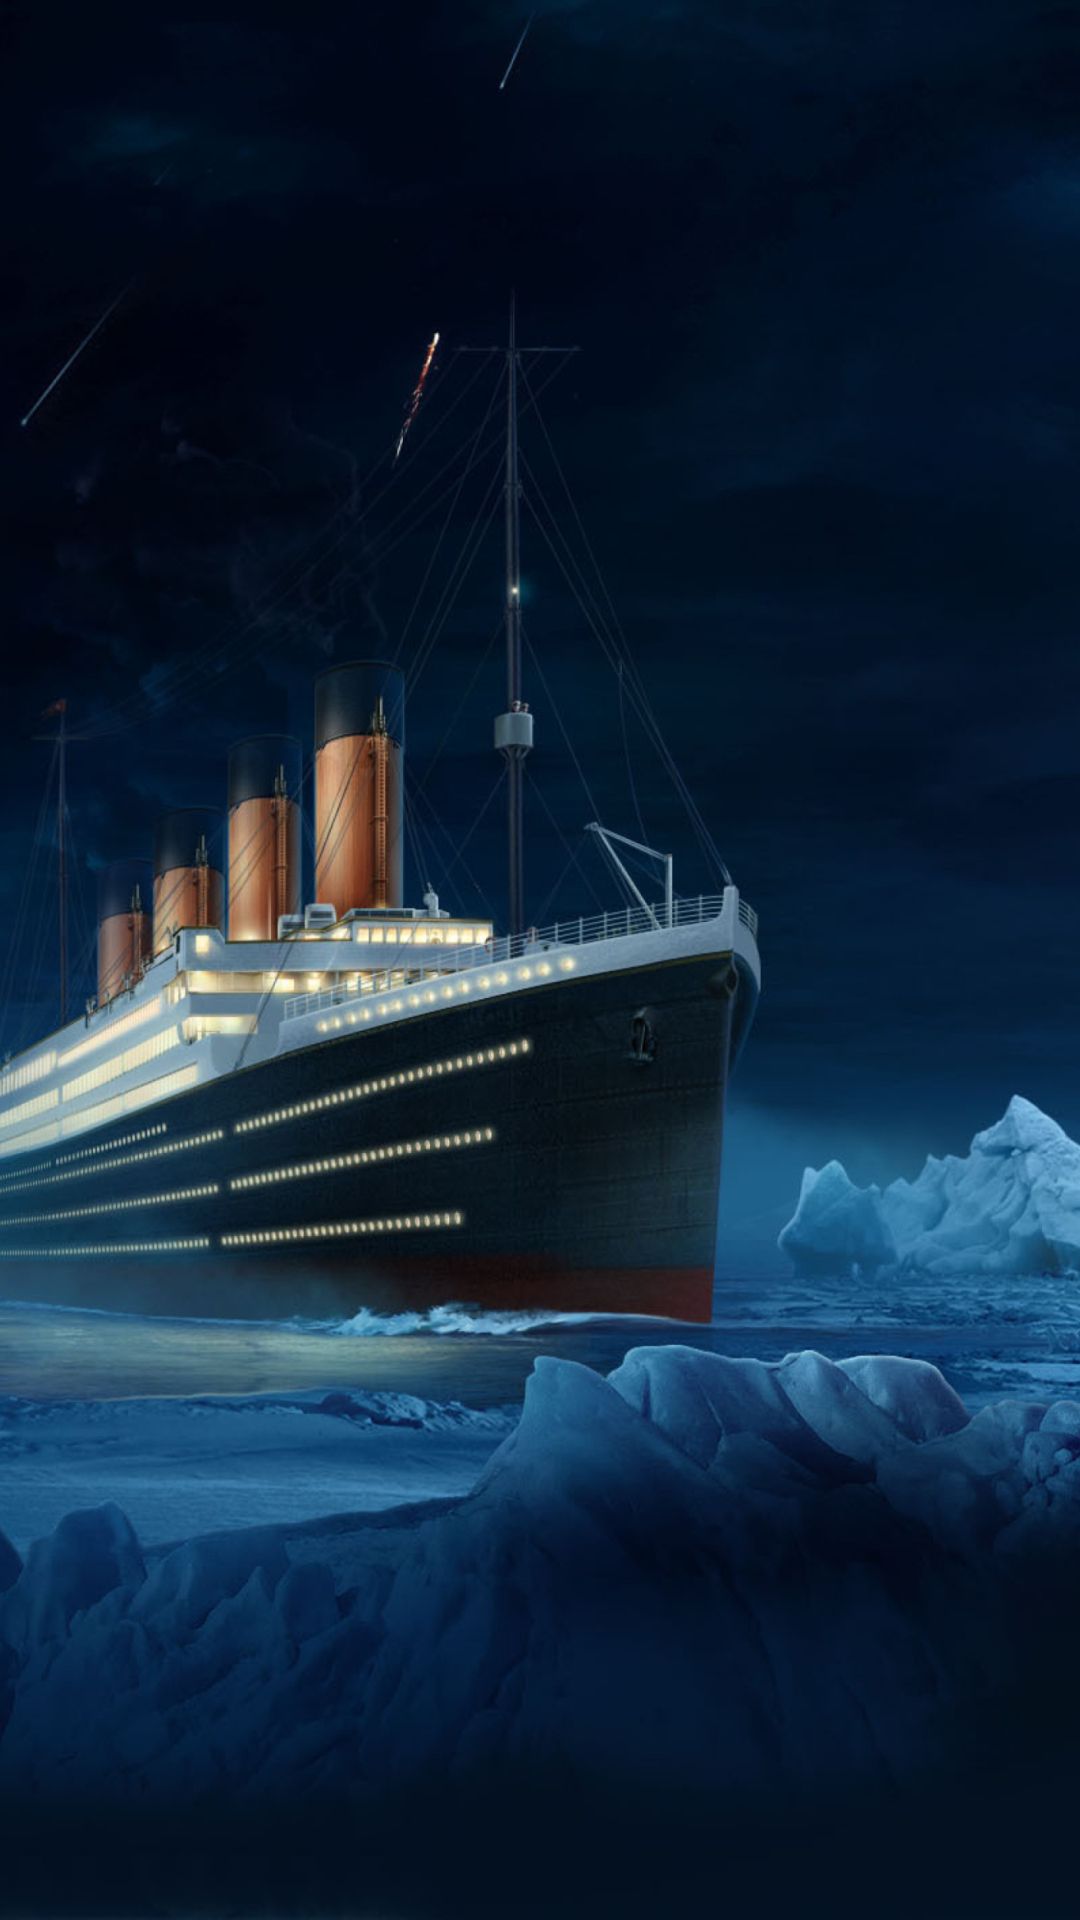 Titanic Desktop Background. Titanic Wallpaper, Titanic Ship Wallpaper and Titanic Hitting Iceberg Wallpaper